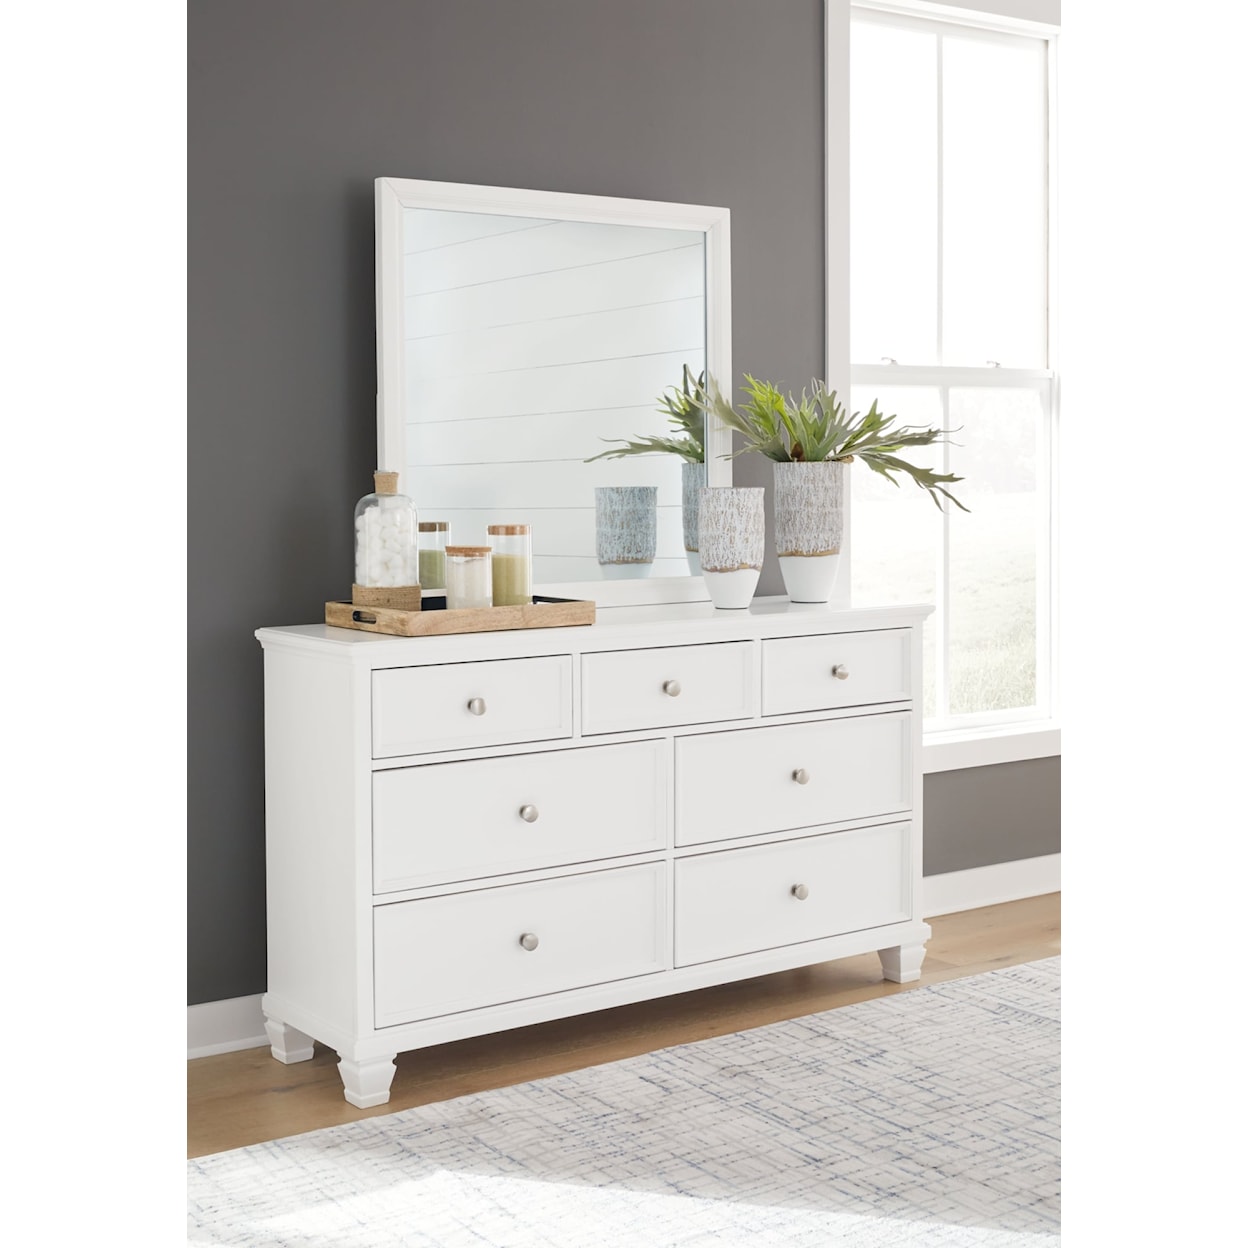 Ashley Furniture Signature Design Fortman Dresser and Mirror